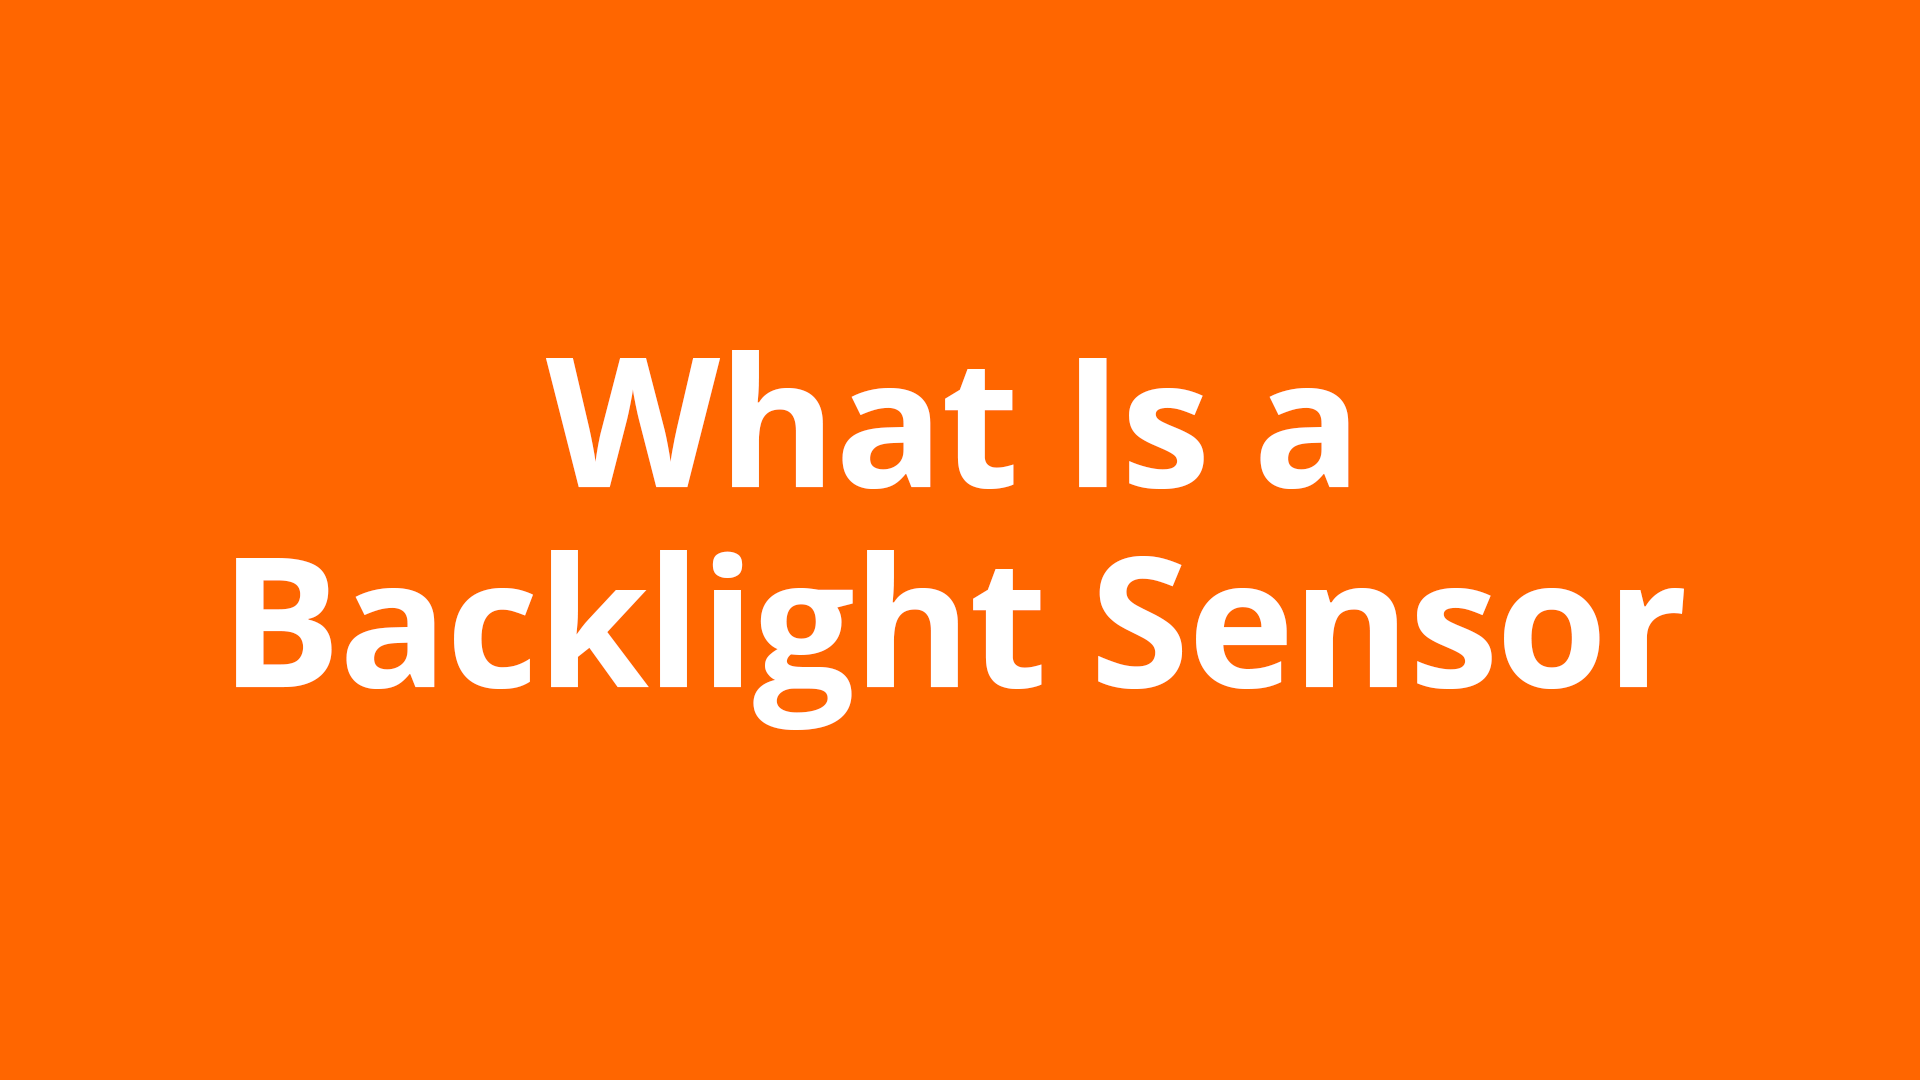 What Is a Backlit Sensor?